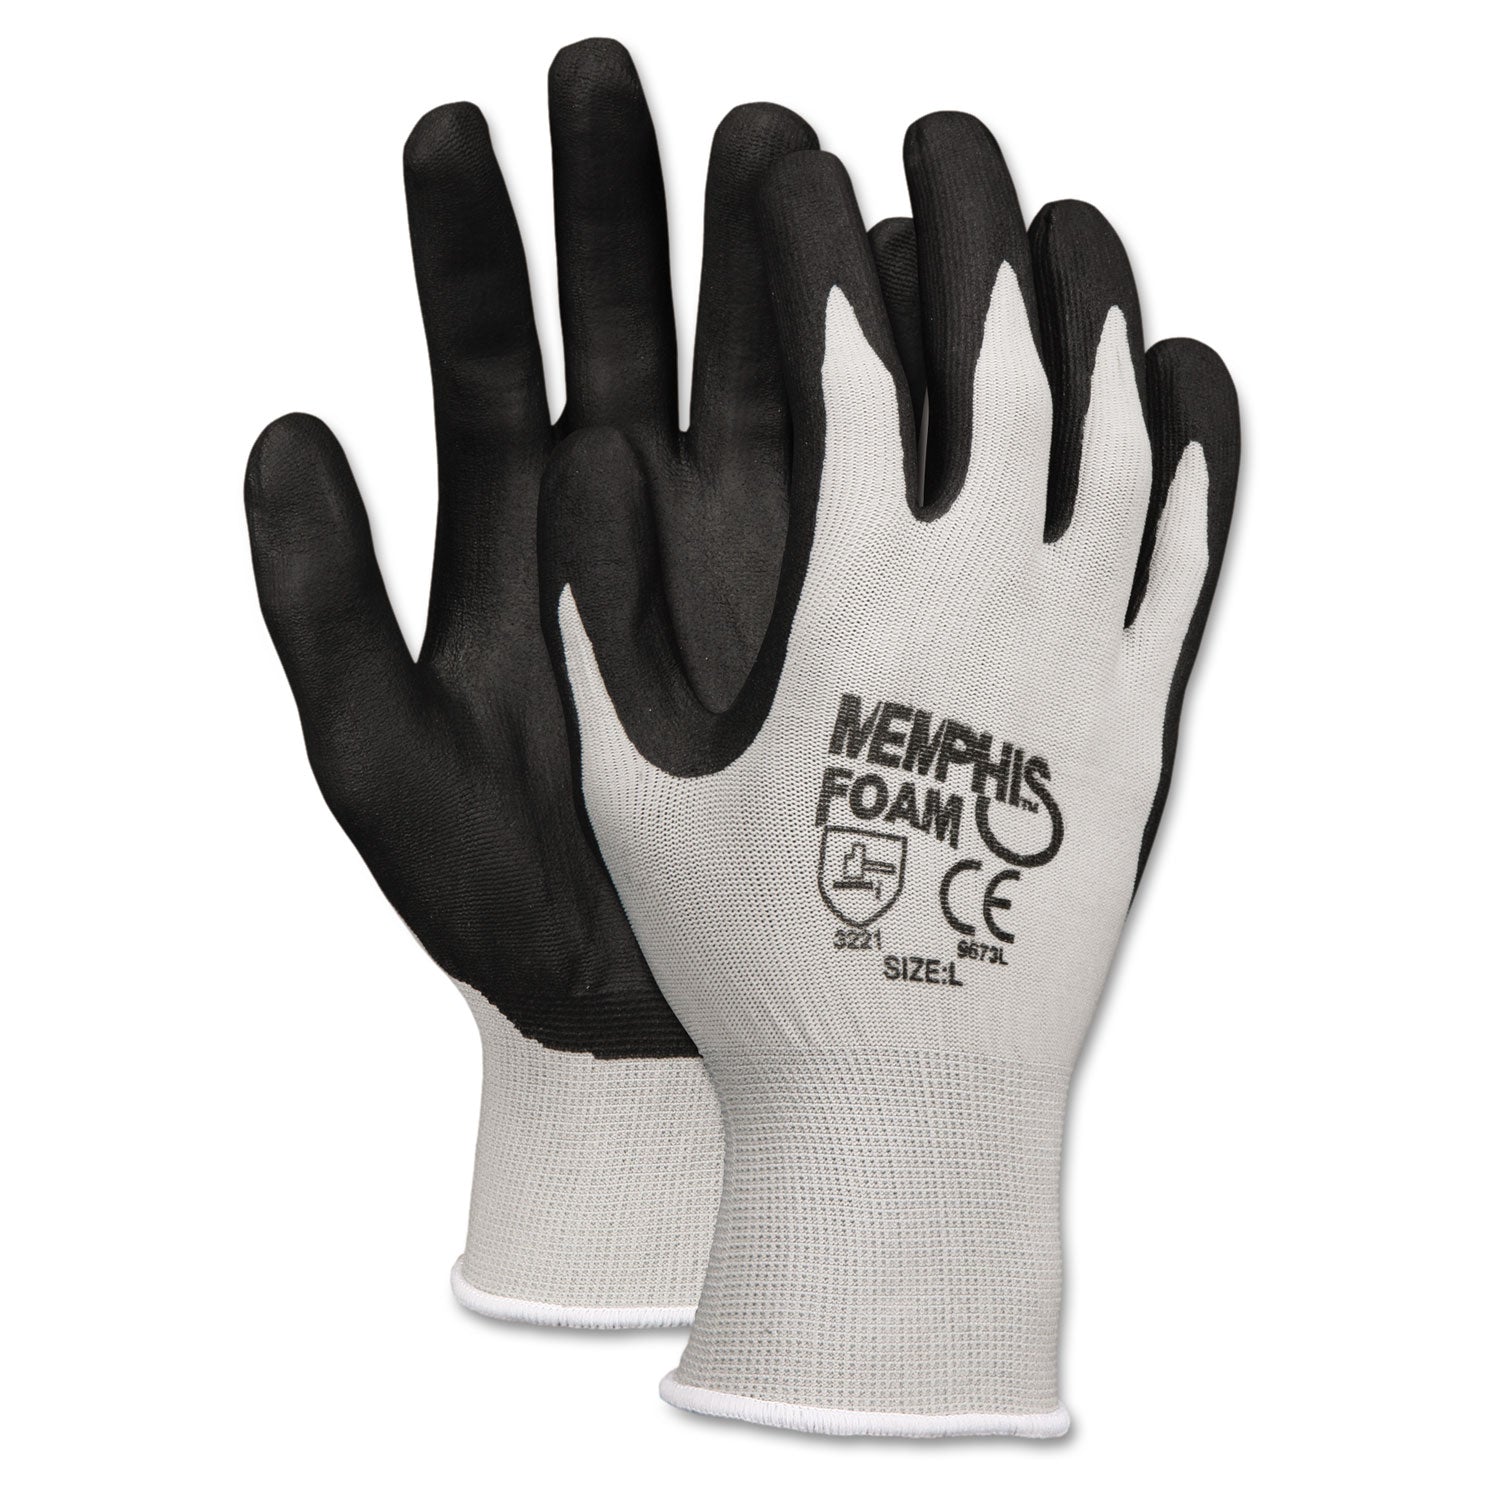 Economy Foam Nitrile Gloves, X-Large, Gray/Black, 12 Pairs - 